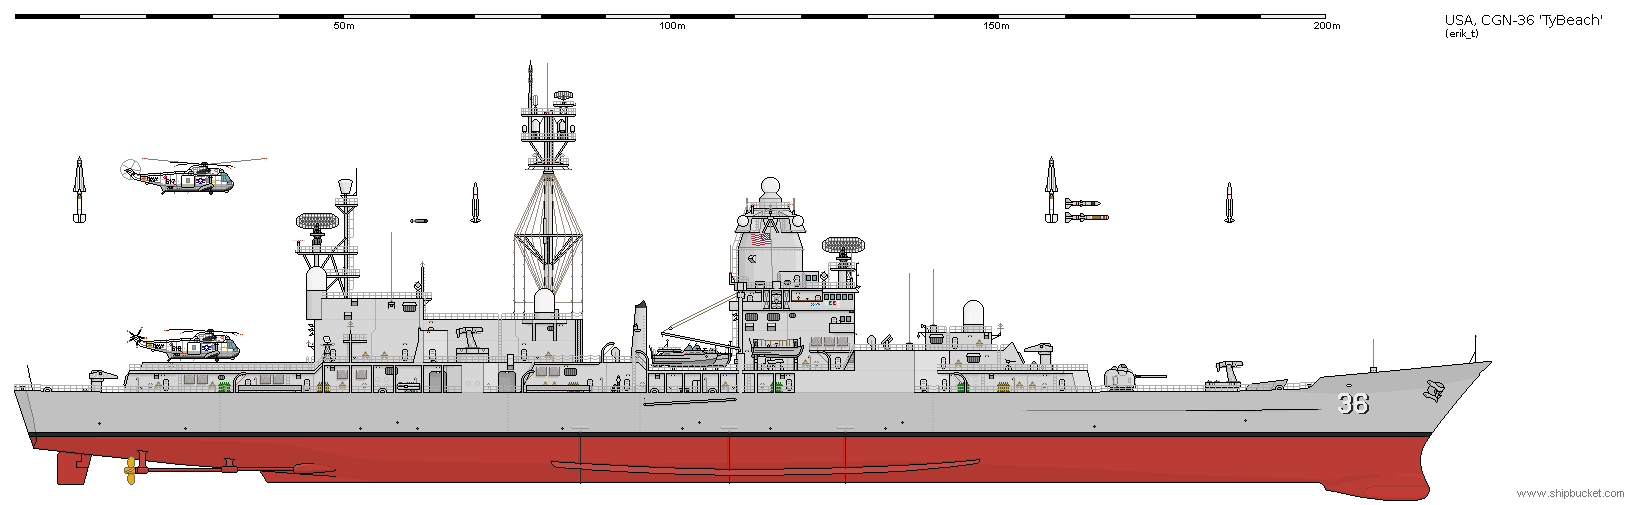 CGN-36 'TyBeach' - final version - Page 2 - Shipbucket